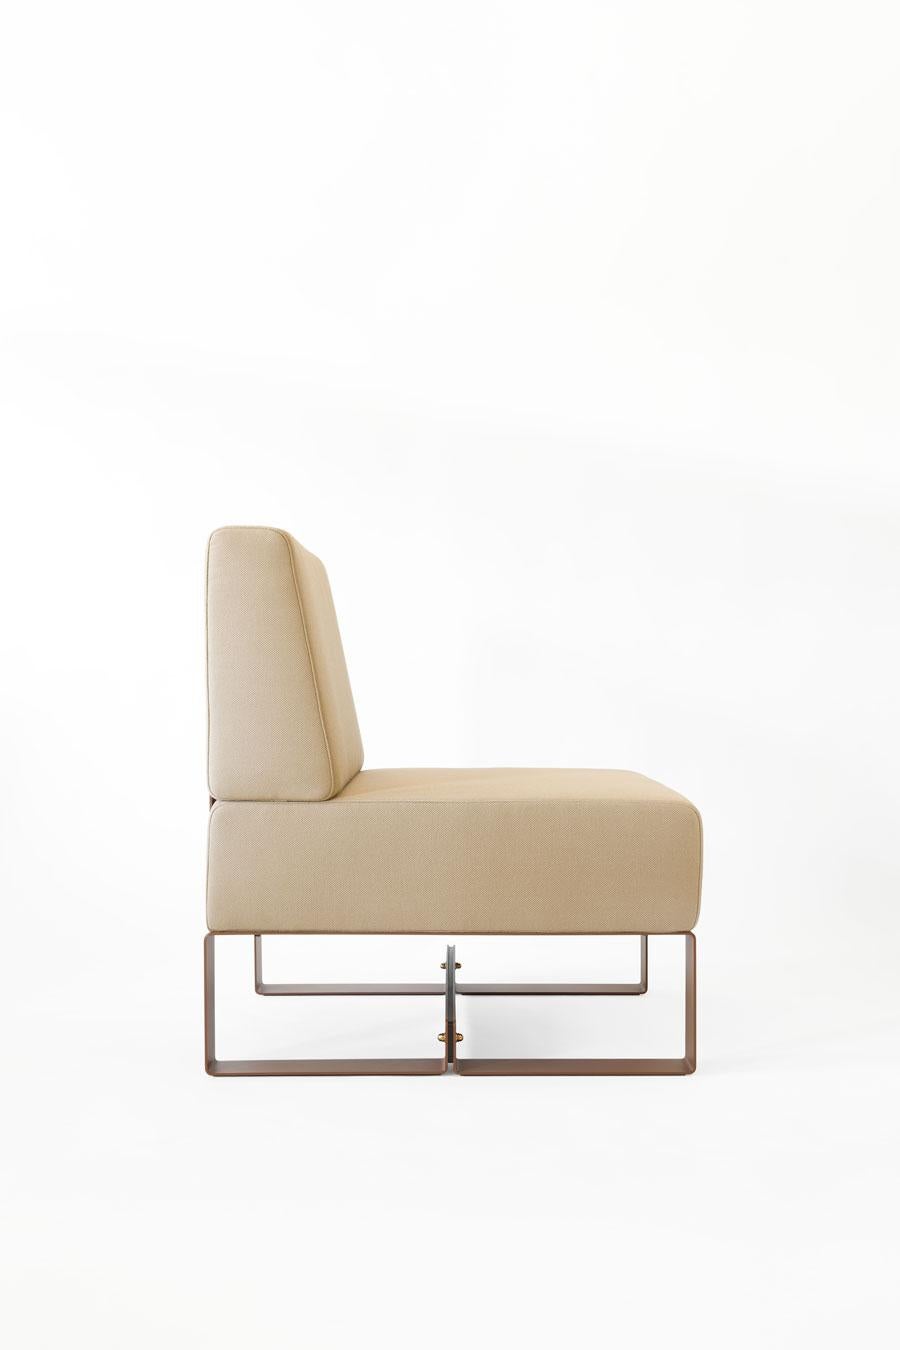 Adolfo Abejon Contemporary 'Cubit' Brown Sculptural Easy Chair 1